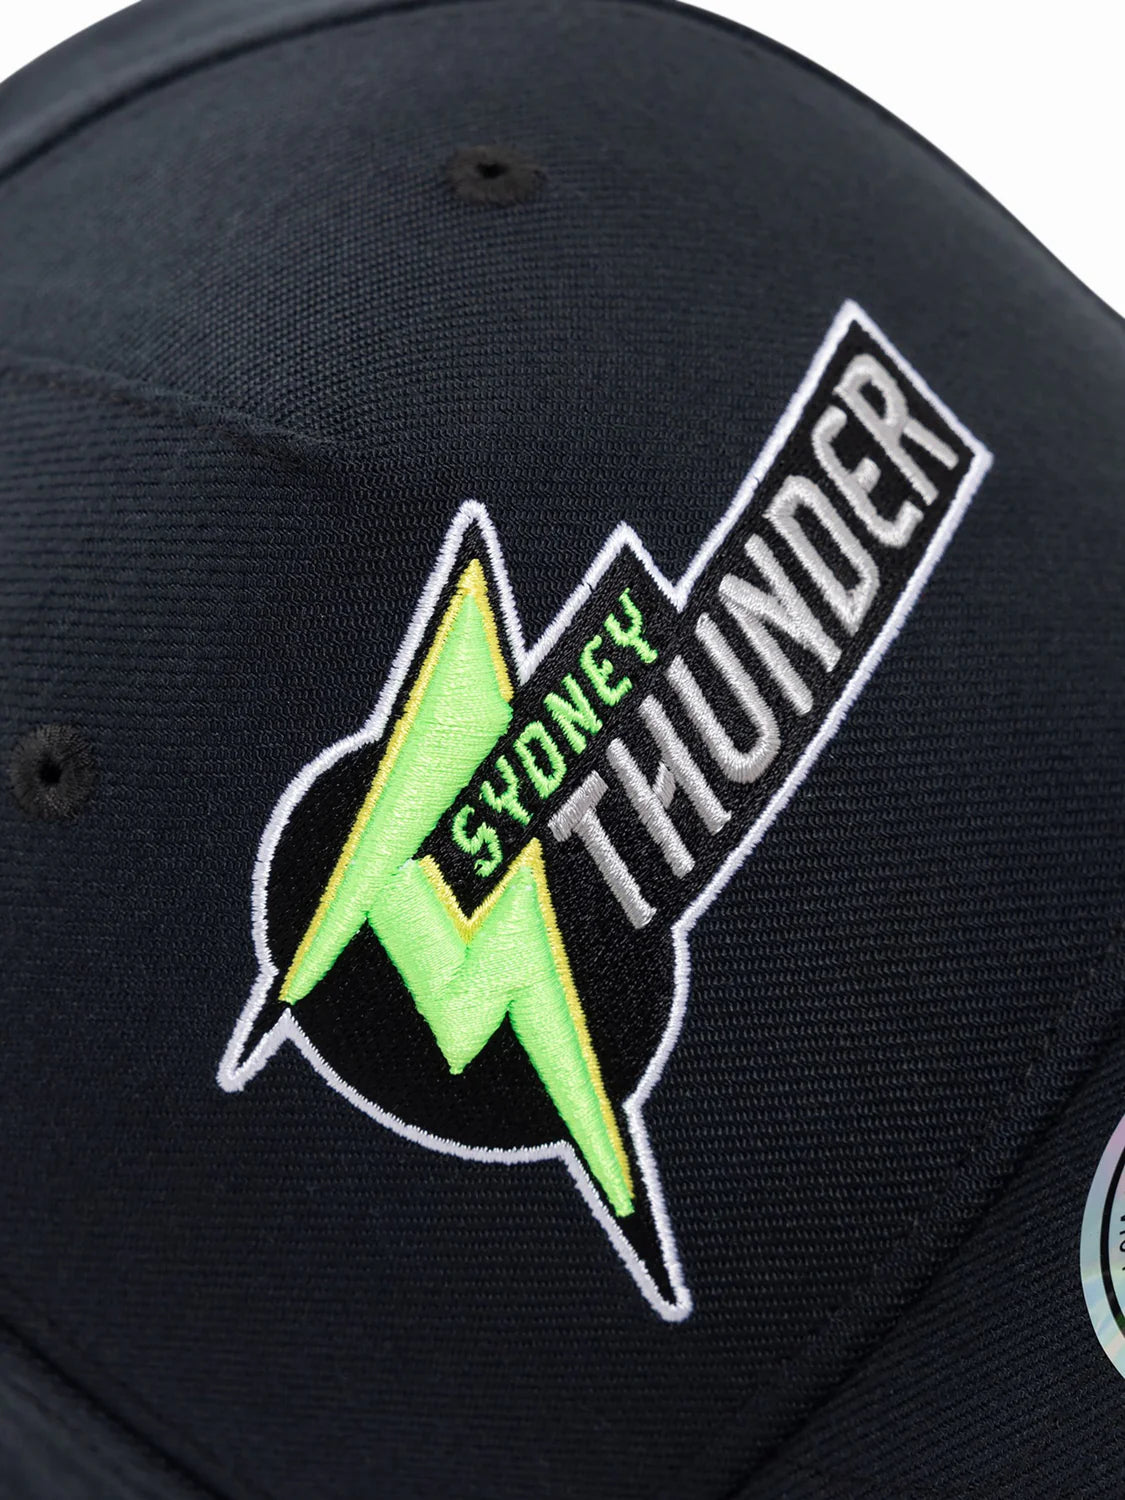 Sydney Thunder Hat - BBL Black Team Logo Classic Redline Snapback Cap - Mitchell & Ness